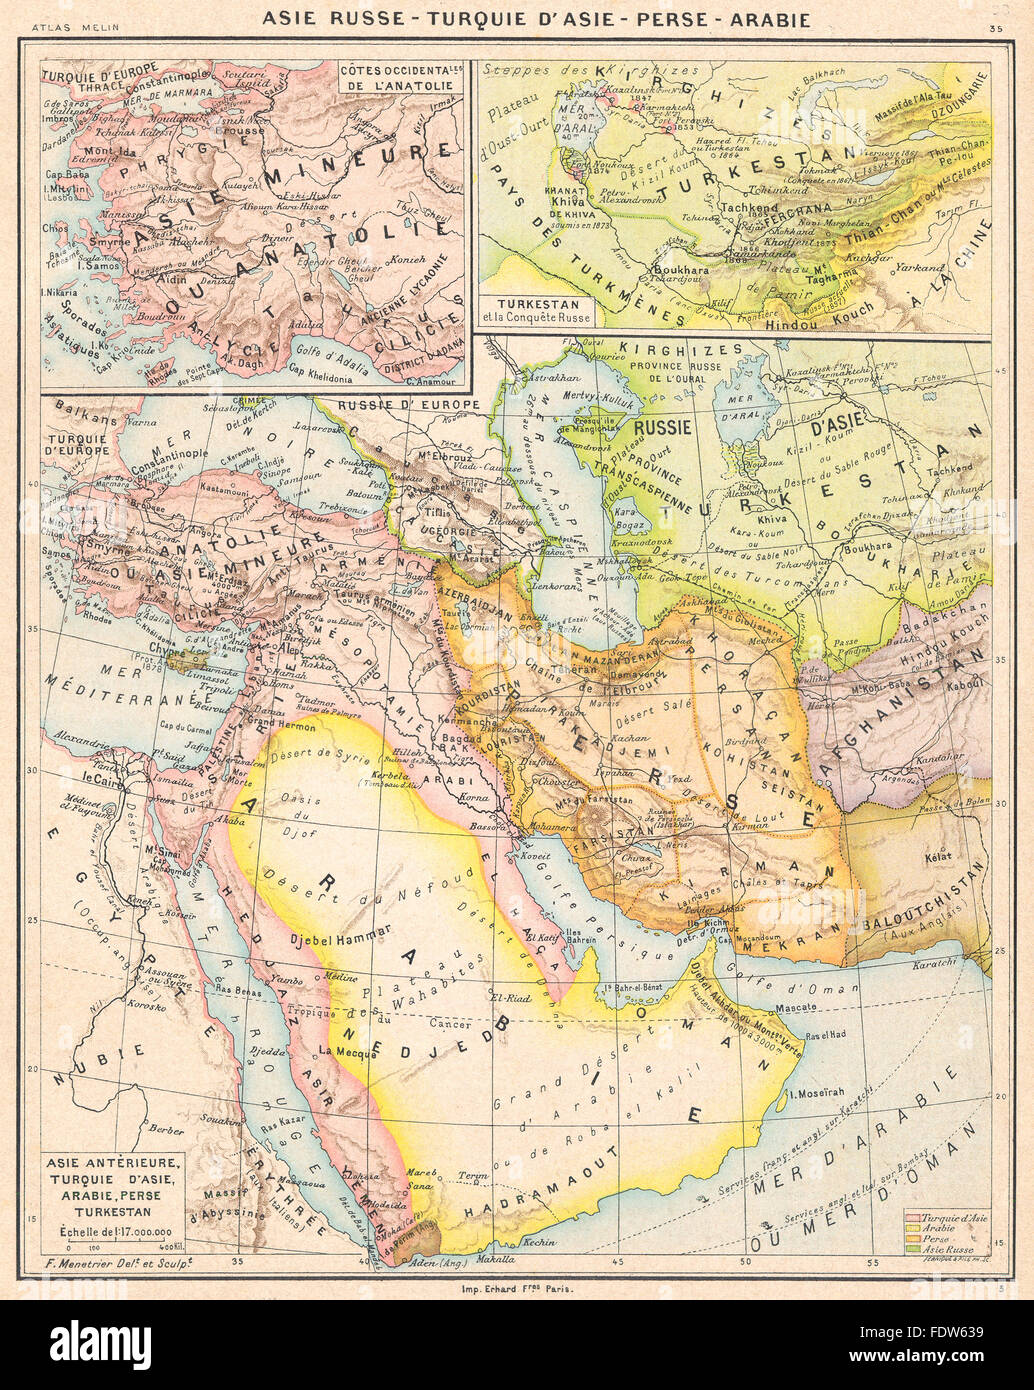 ASIA:Asie Antèrieure,Turquie,Arabie,Perse(Persia)Turkestan;Anatolie, 1900 map Stock Photo